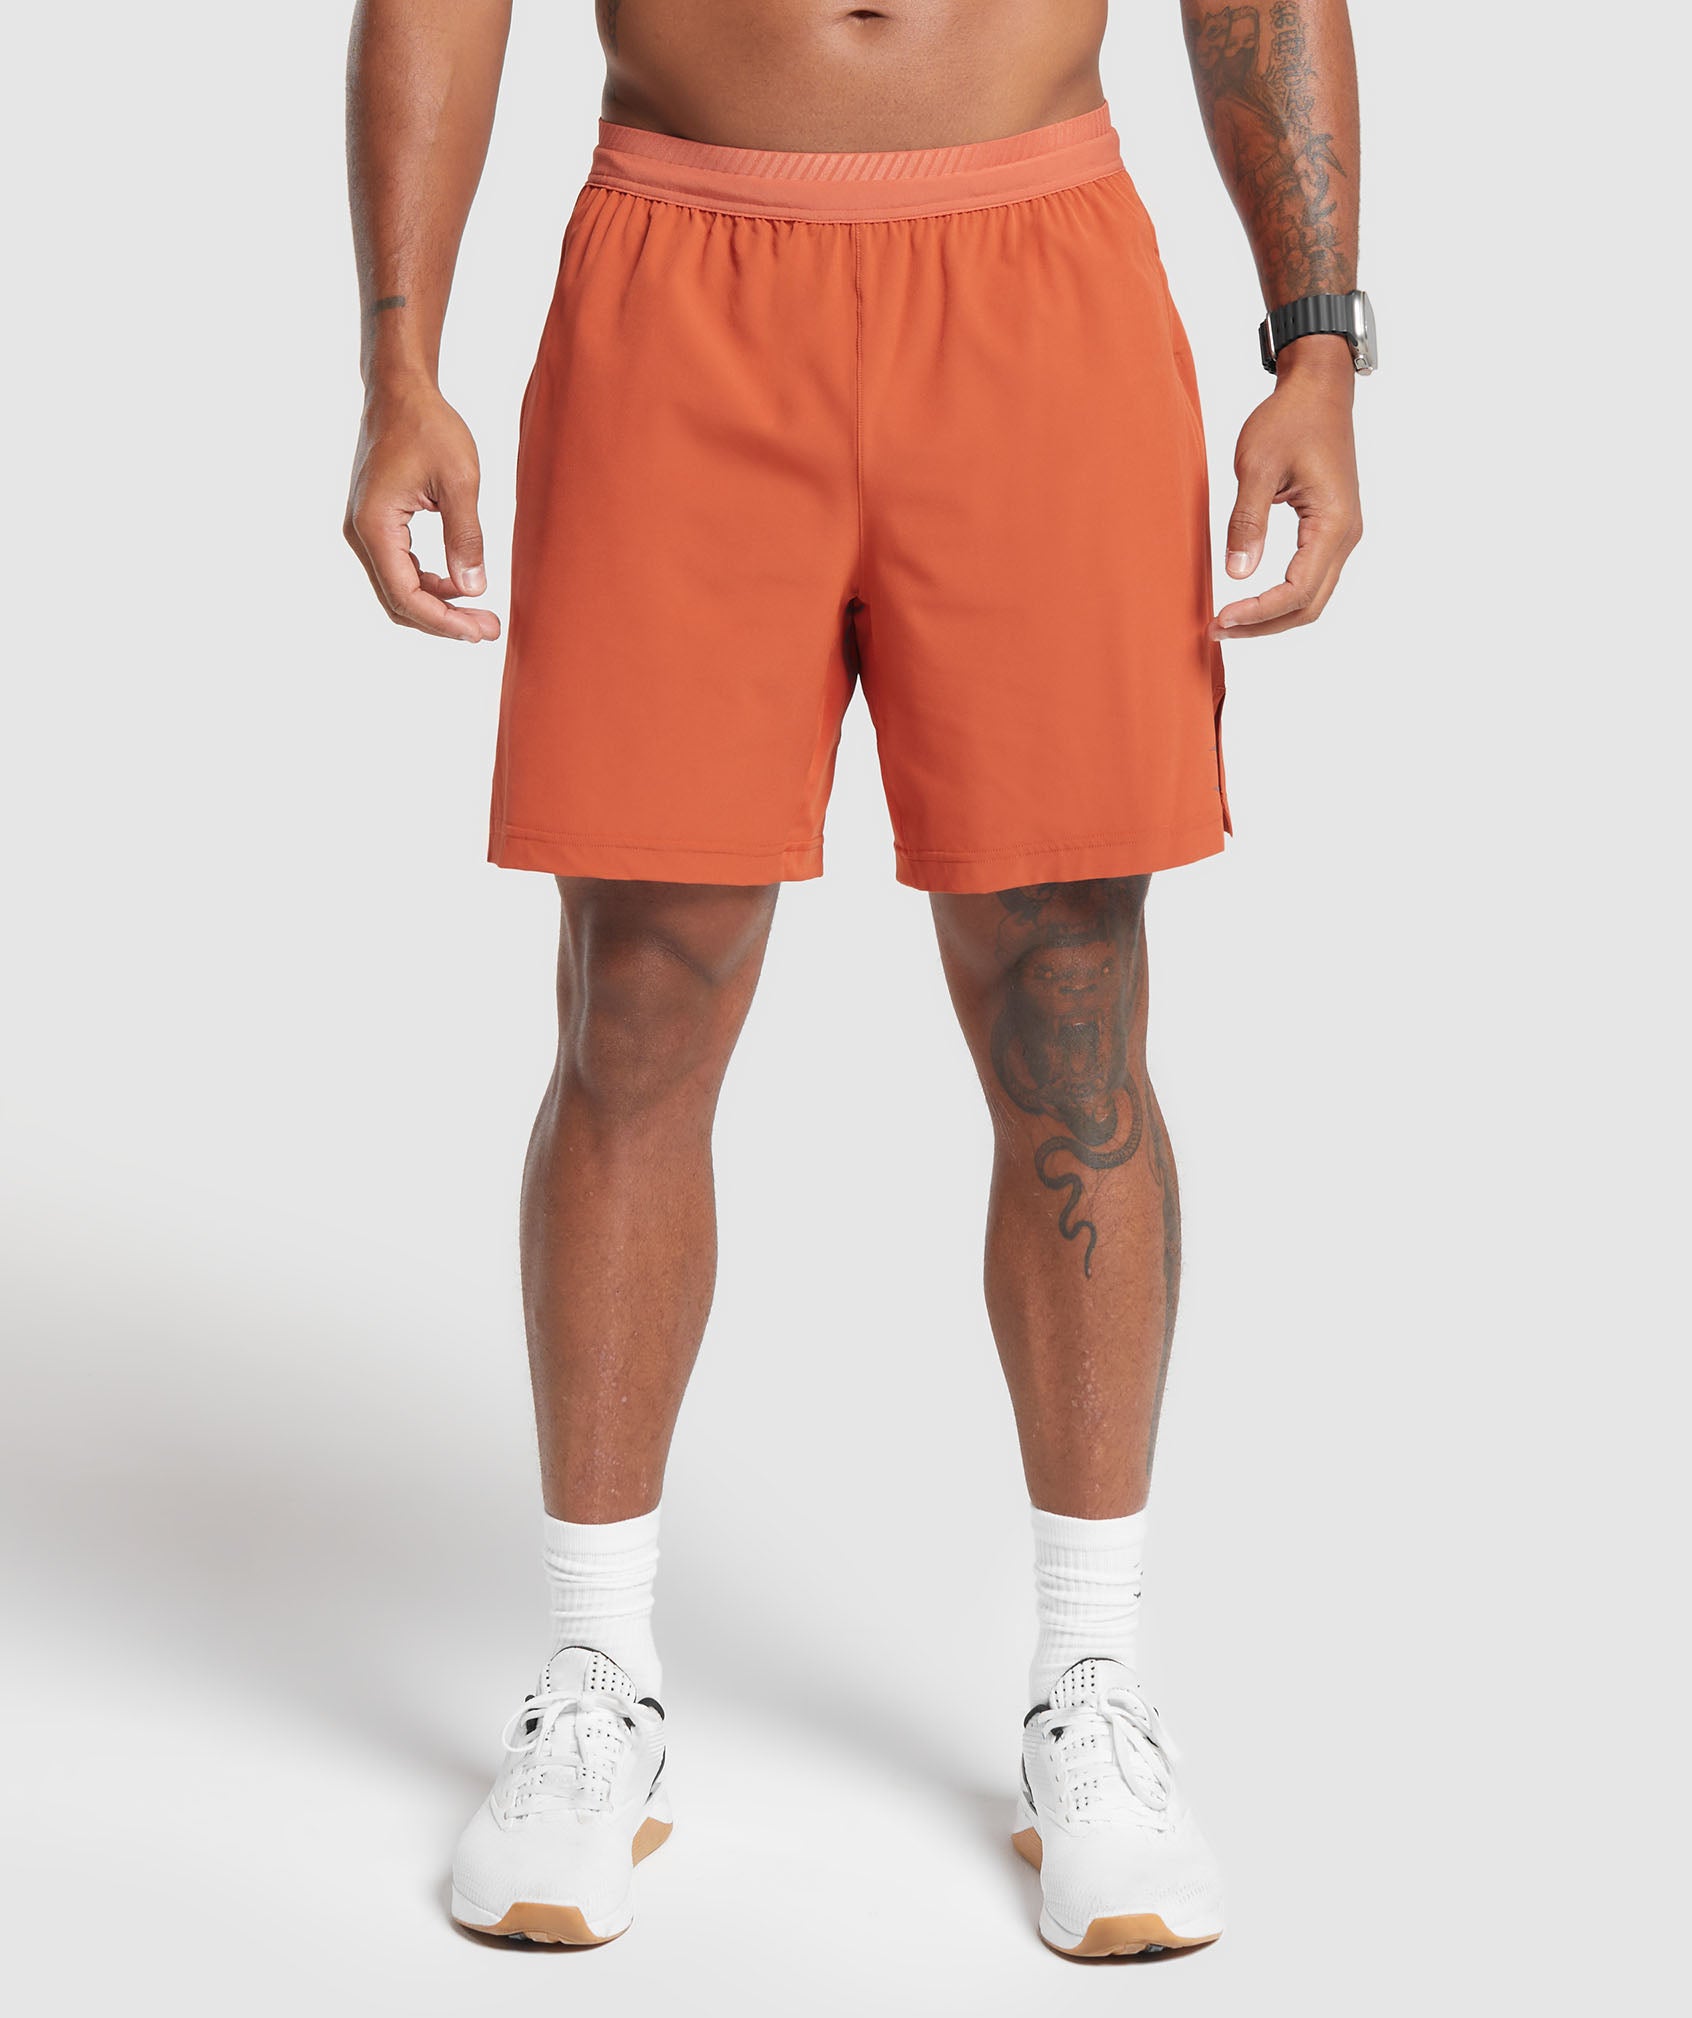 Apex 7" Hybrid Shorts in Rust Orange - view 1